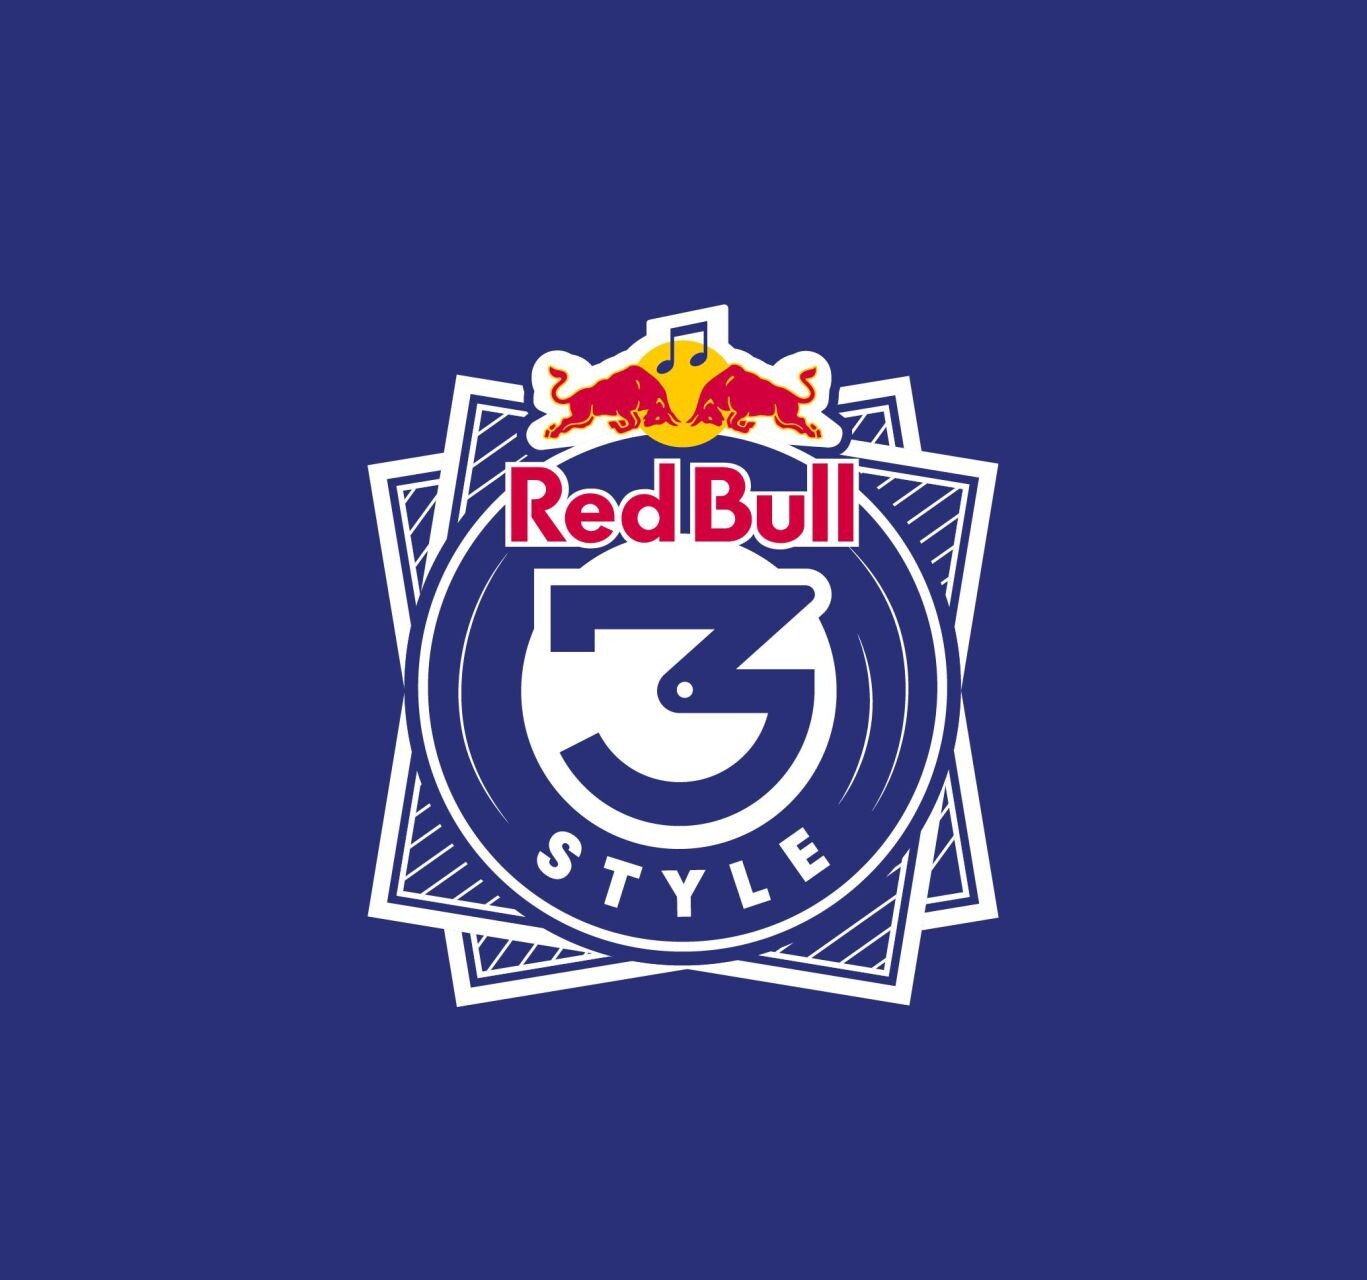 Iflyer No 1を決める世界最大規模のdj大会 Red Bull 3style の参加募集スタート 今年の決勝の舞台はロシア